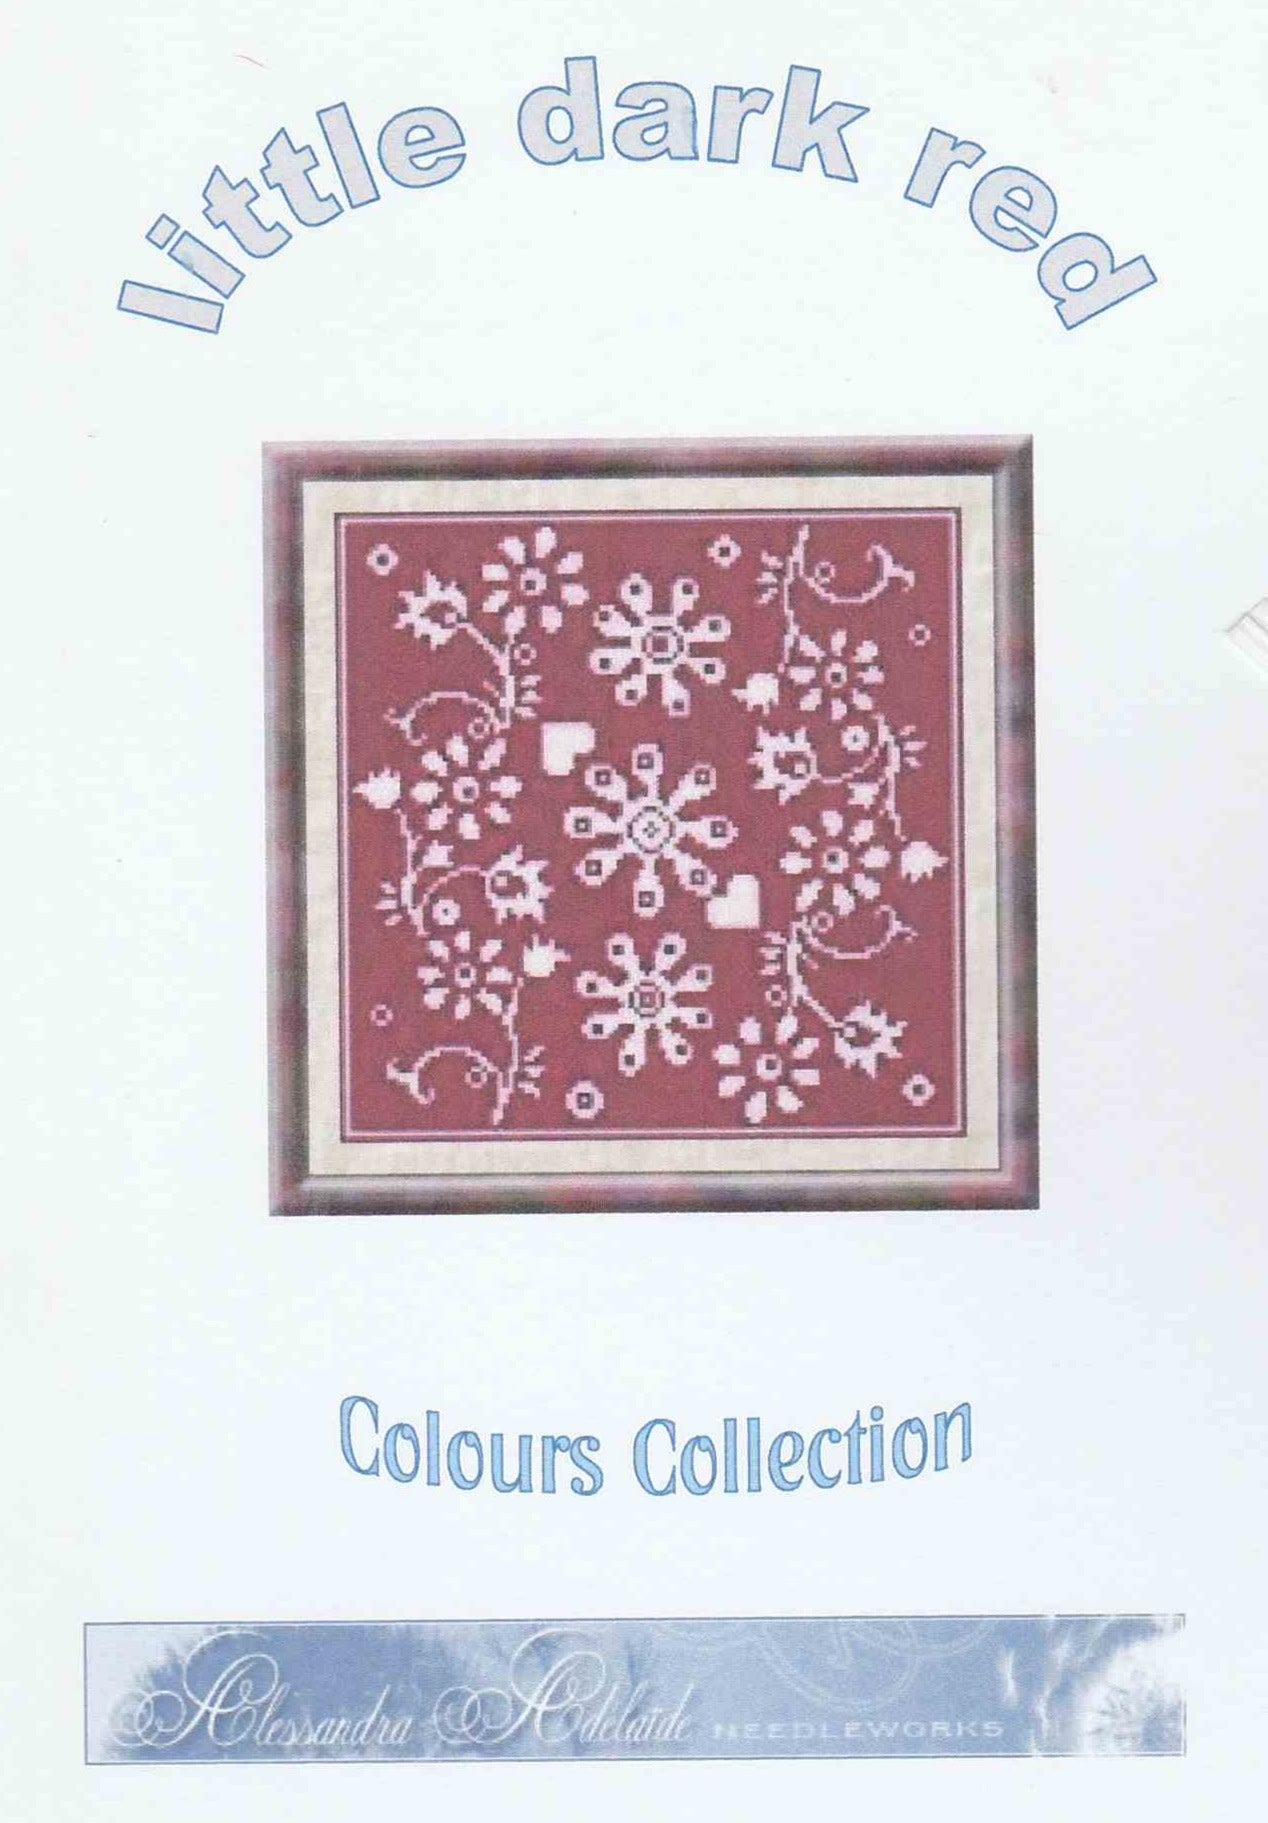 Alessandra Adelaide Needleworks Colours Collection - Petit Rouge Foncé